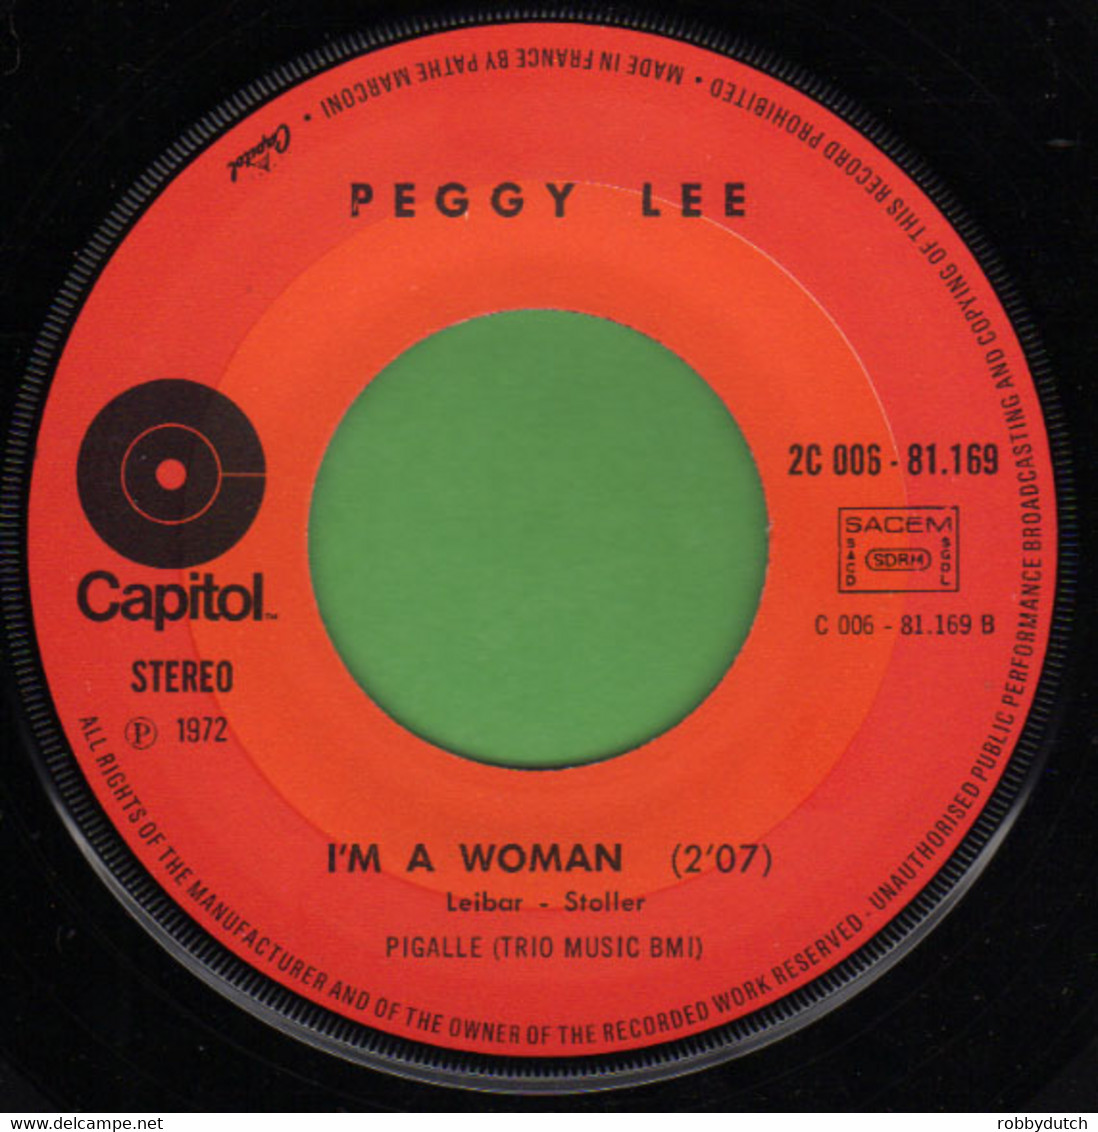 * 7" *  PEGGY LEE - FEVER (DANCE FOR EVER No.8) (France 1972 EX!!) - Jazz